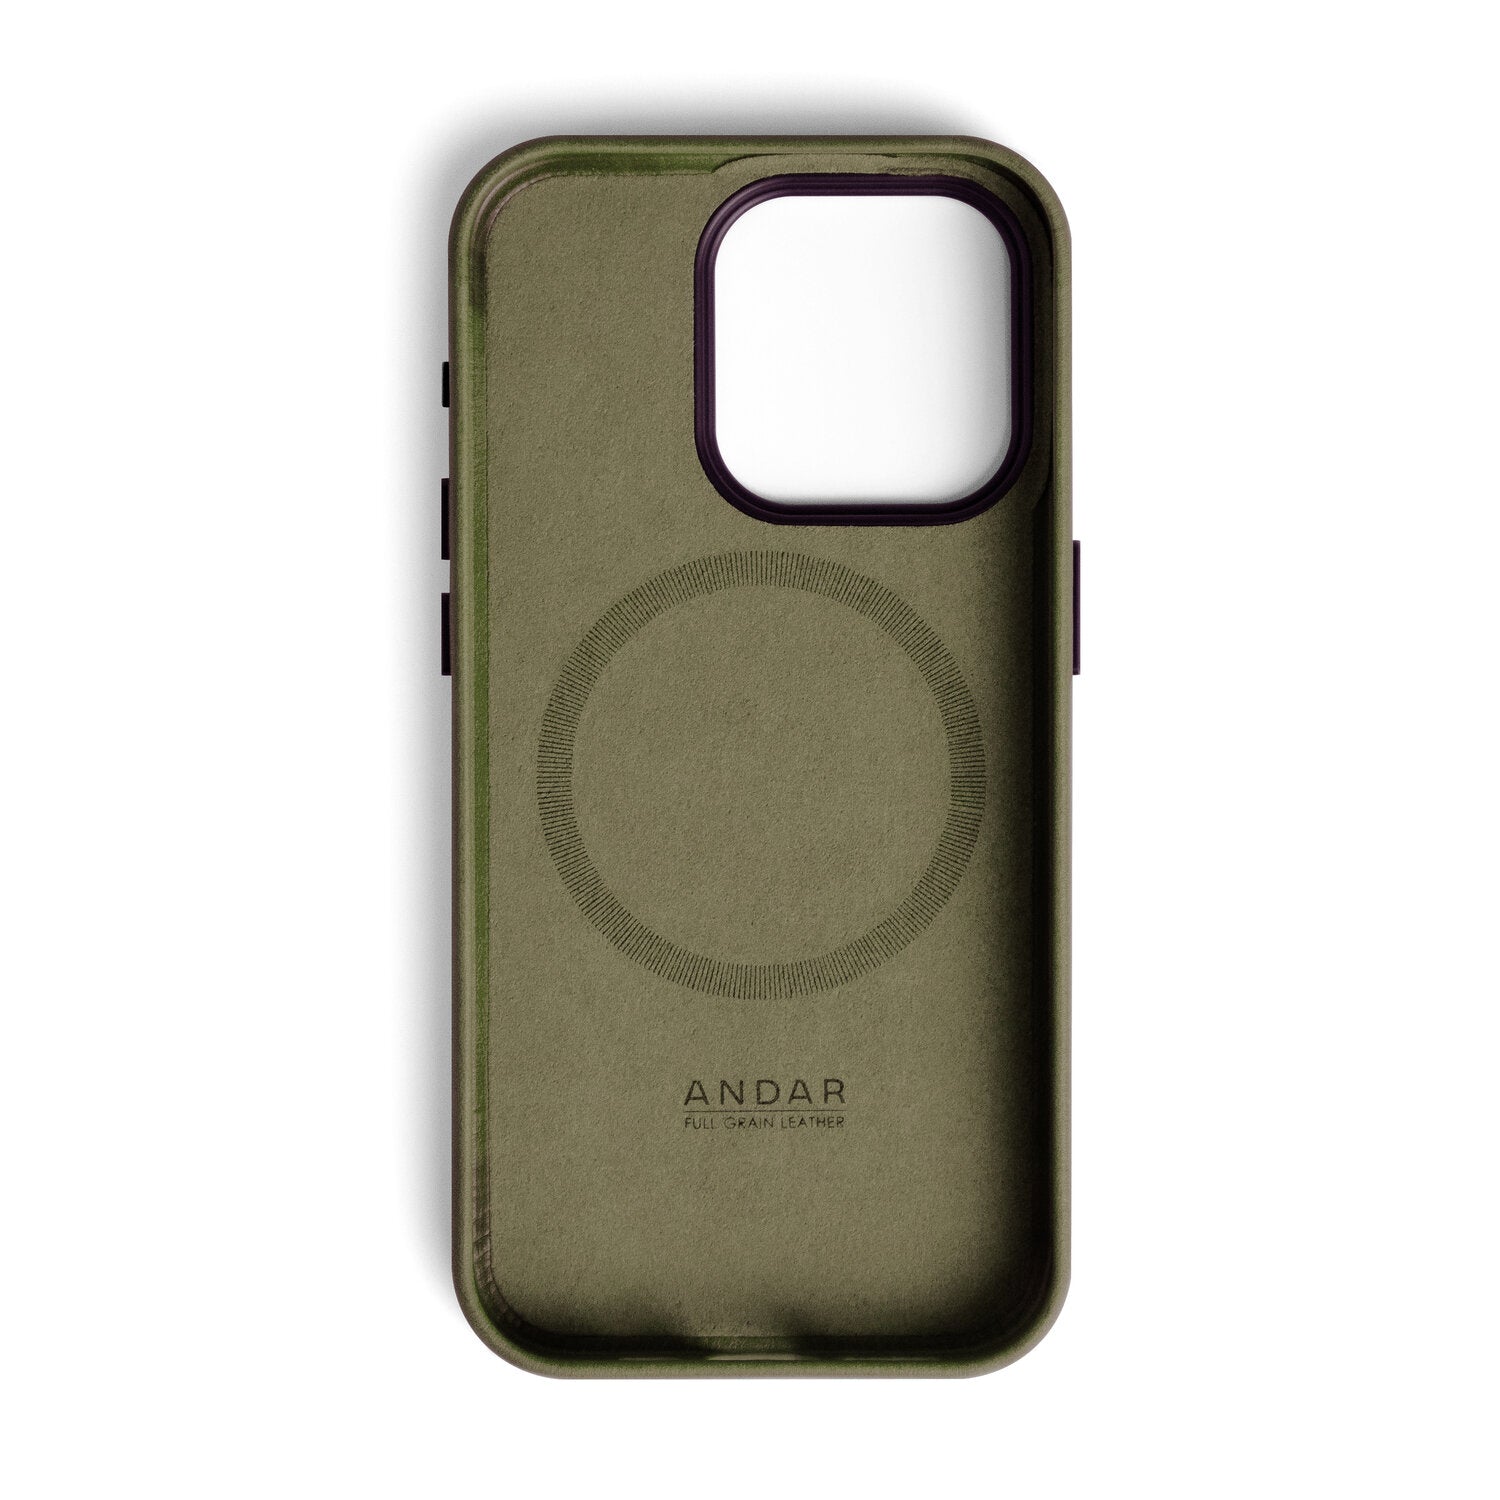 Andar The Aspen Apple iPhone Case, Moss, Leather